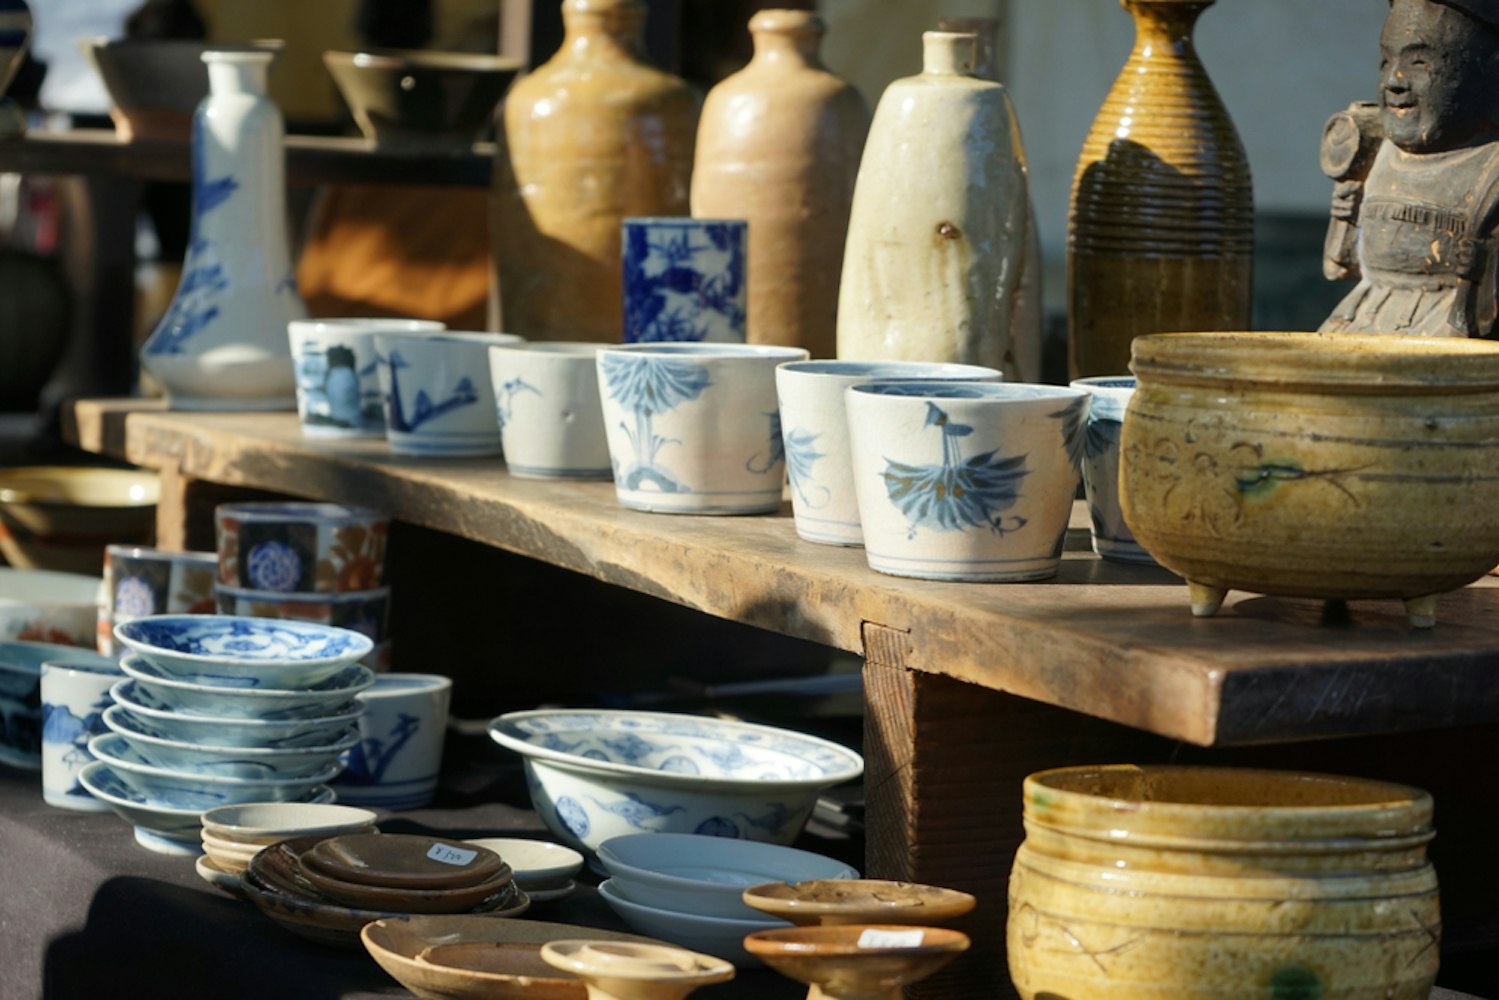 Pottery at Flea Market in Japan